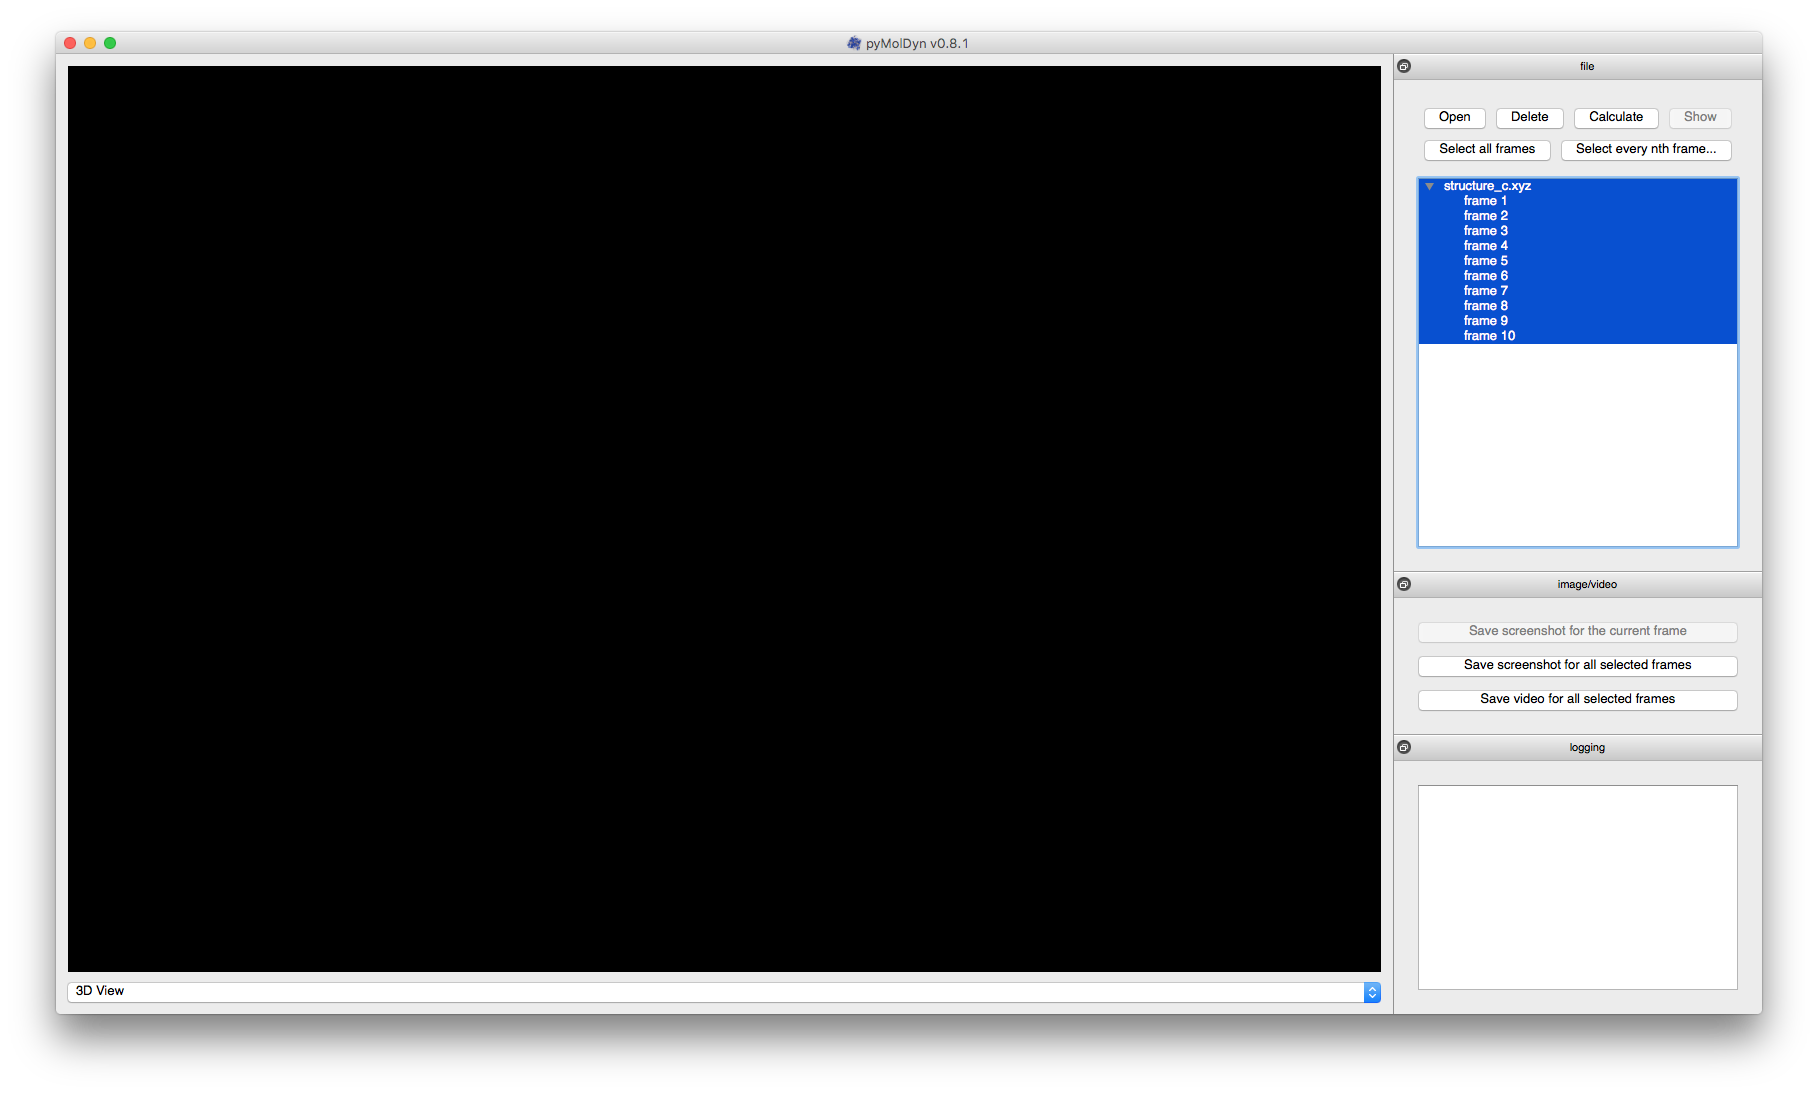 pyMolDyn GUI after selecting frames